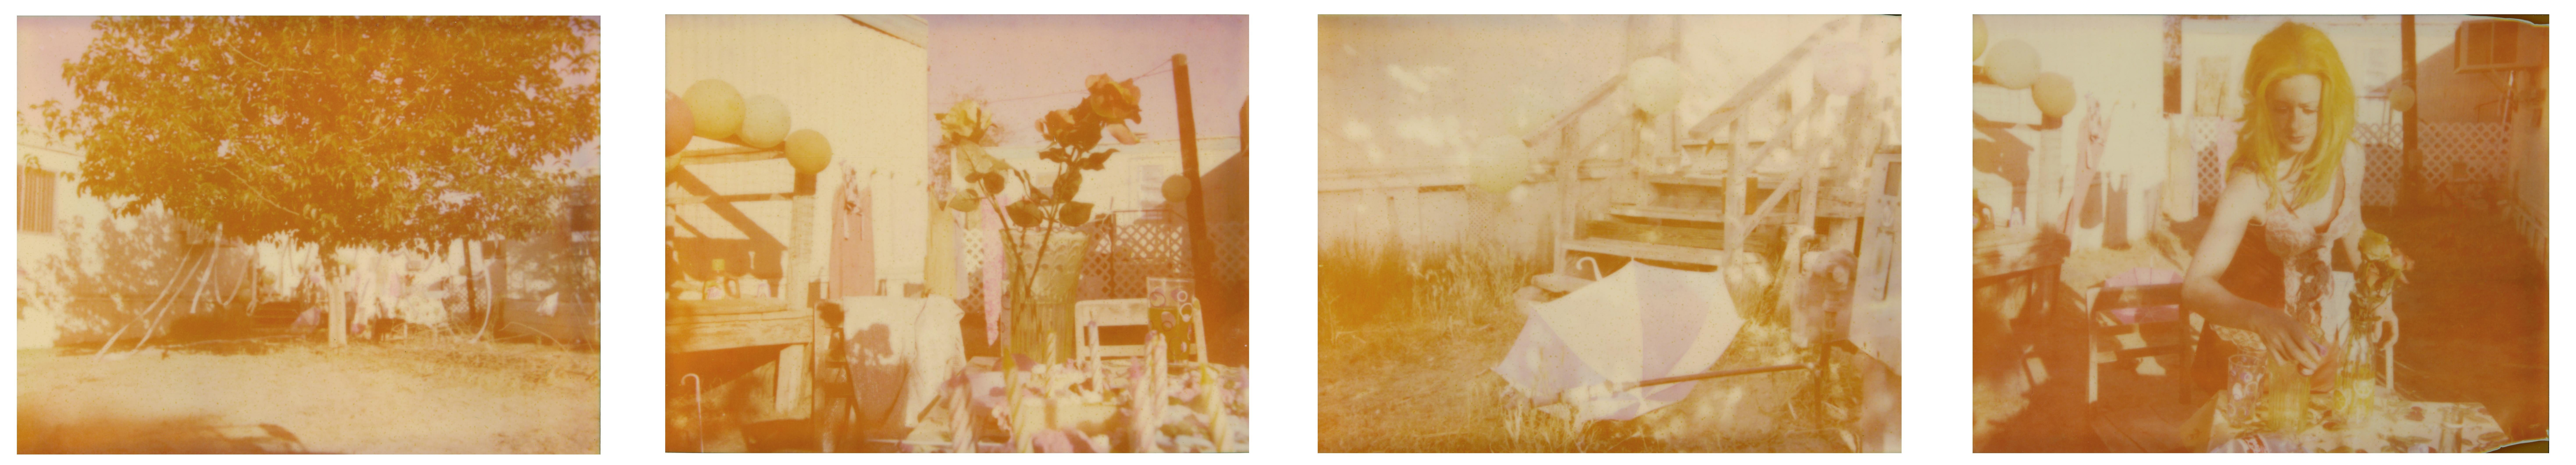 Stefanie Schneider Portrait Photograph - Cleaning-up (Oxana's 30th Birthday) 4 pieces, analog, Polaroid